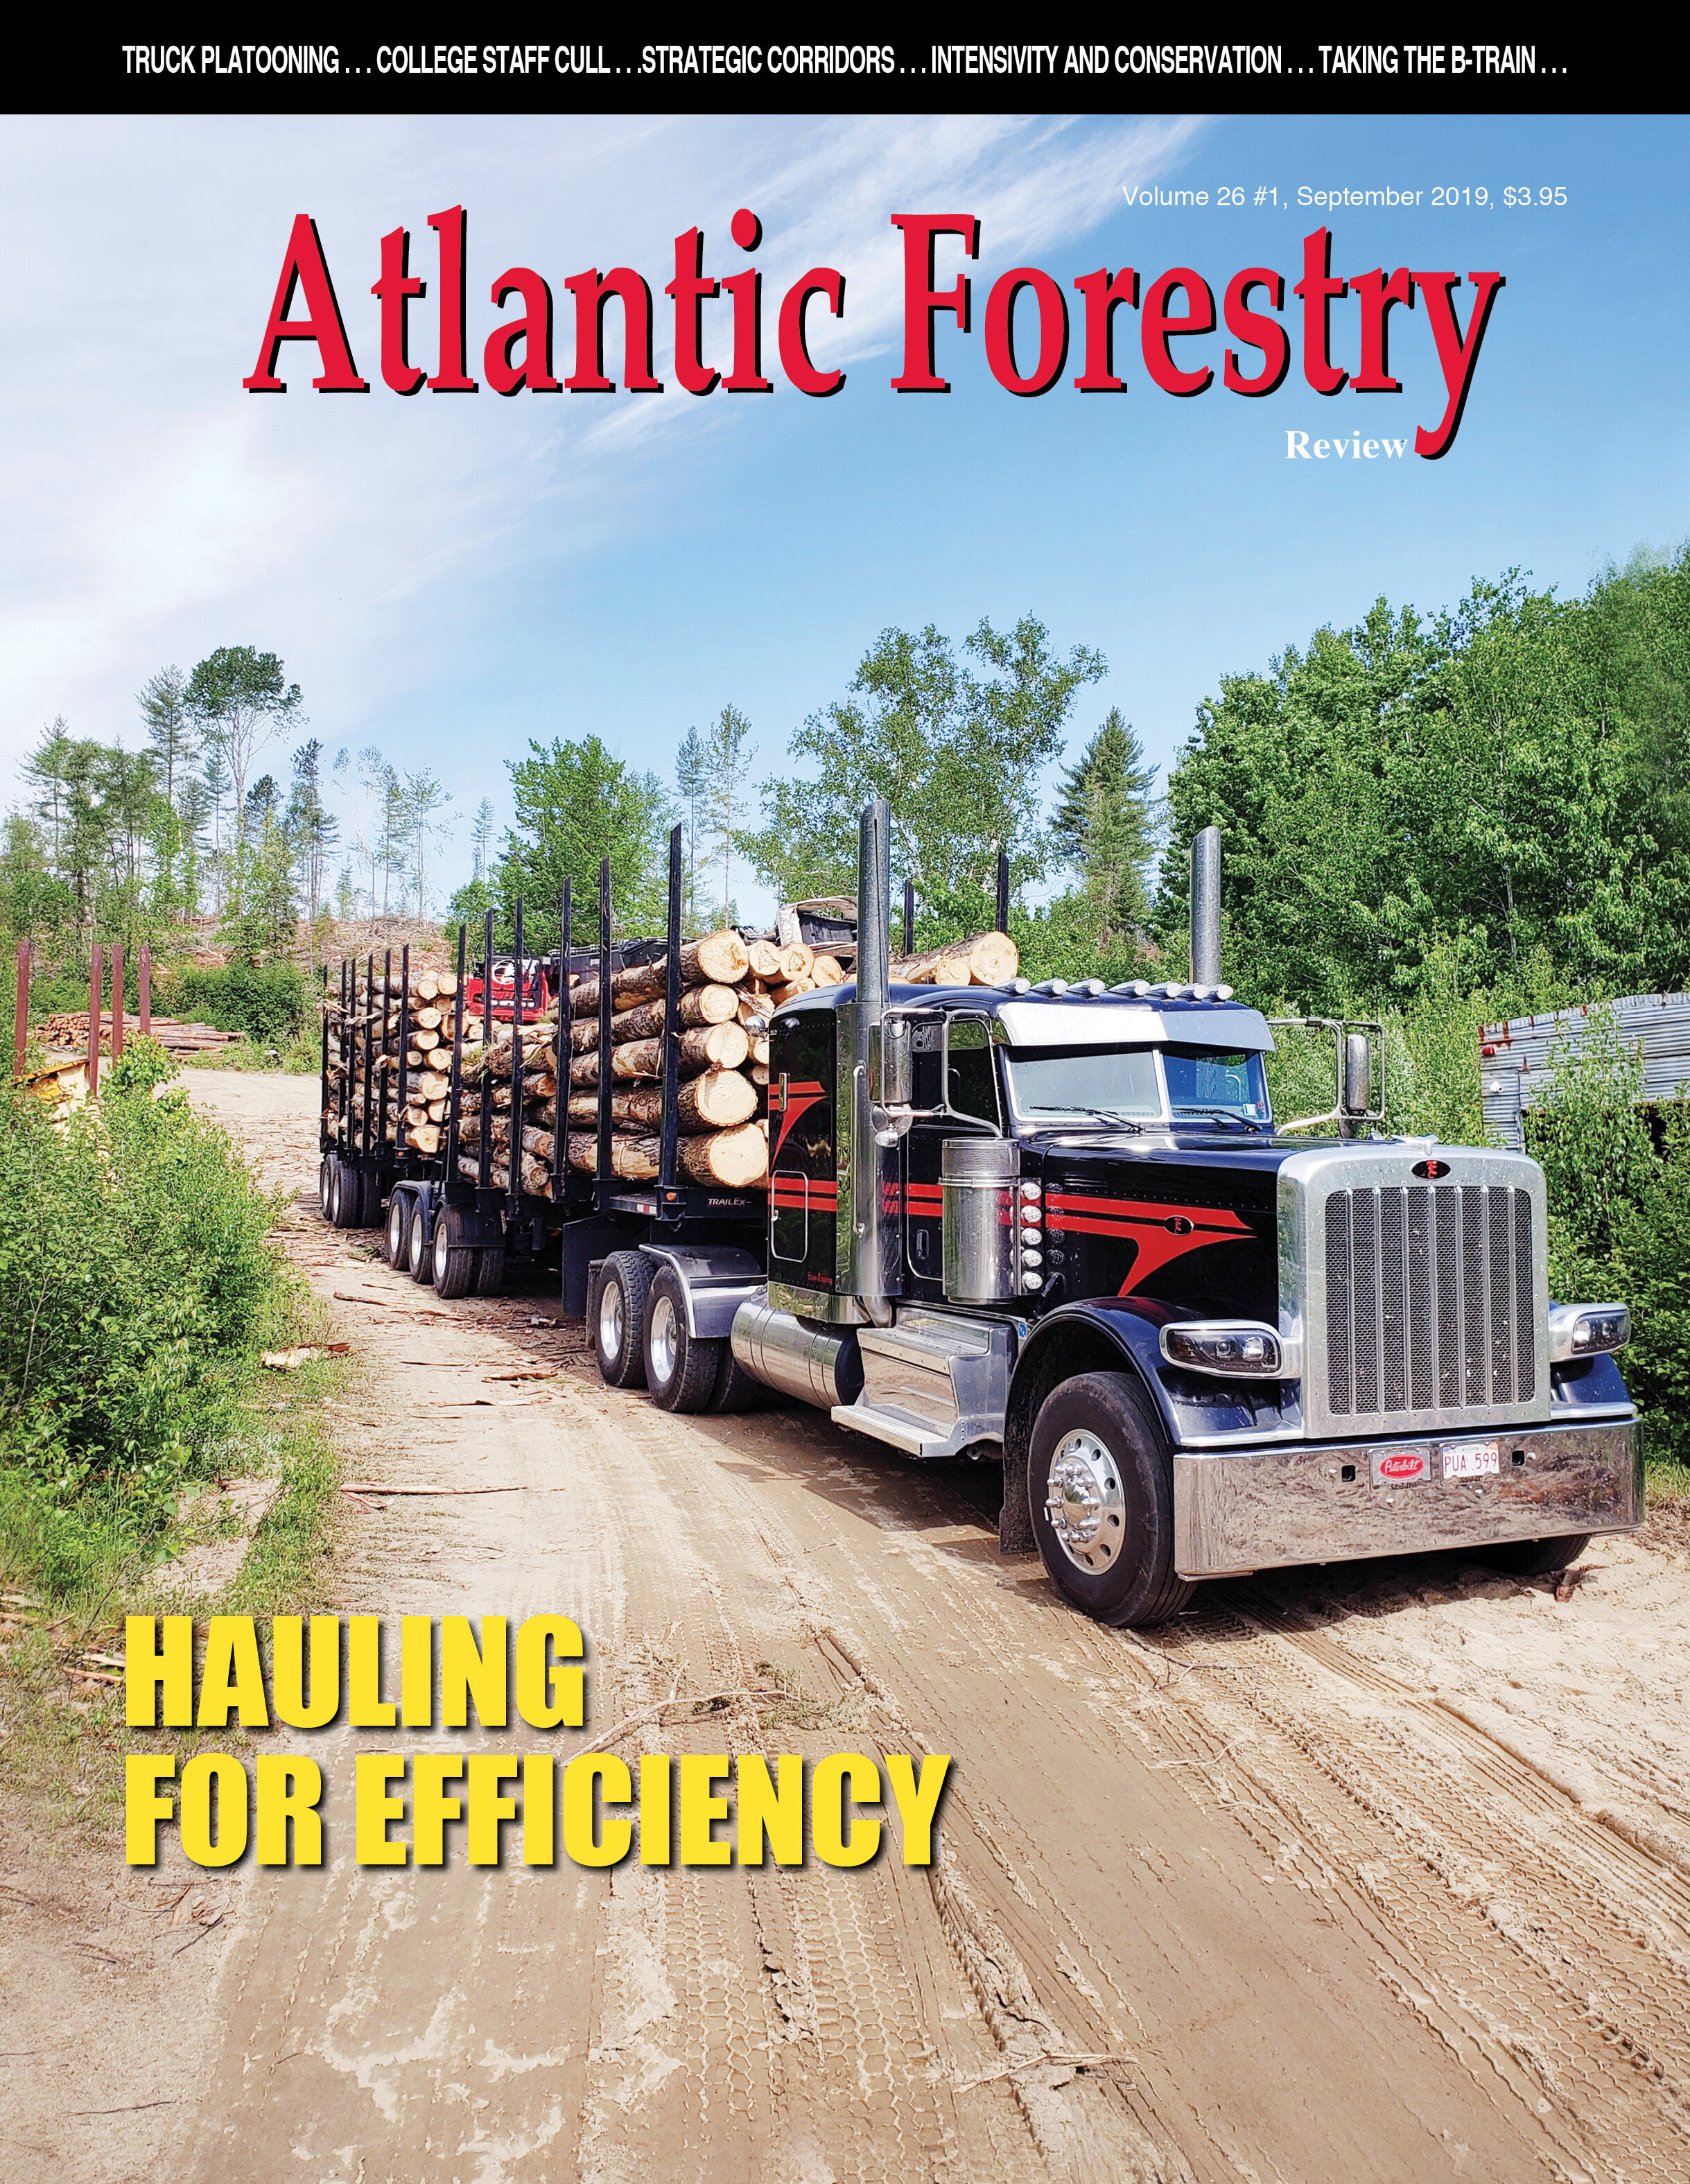 AtlanticForestry Sept 2019.jpg